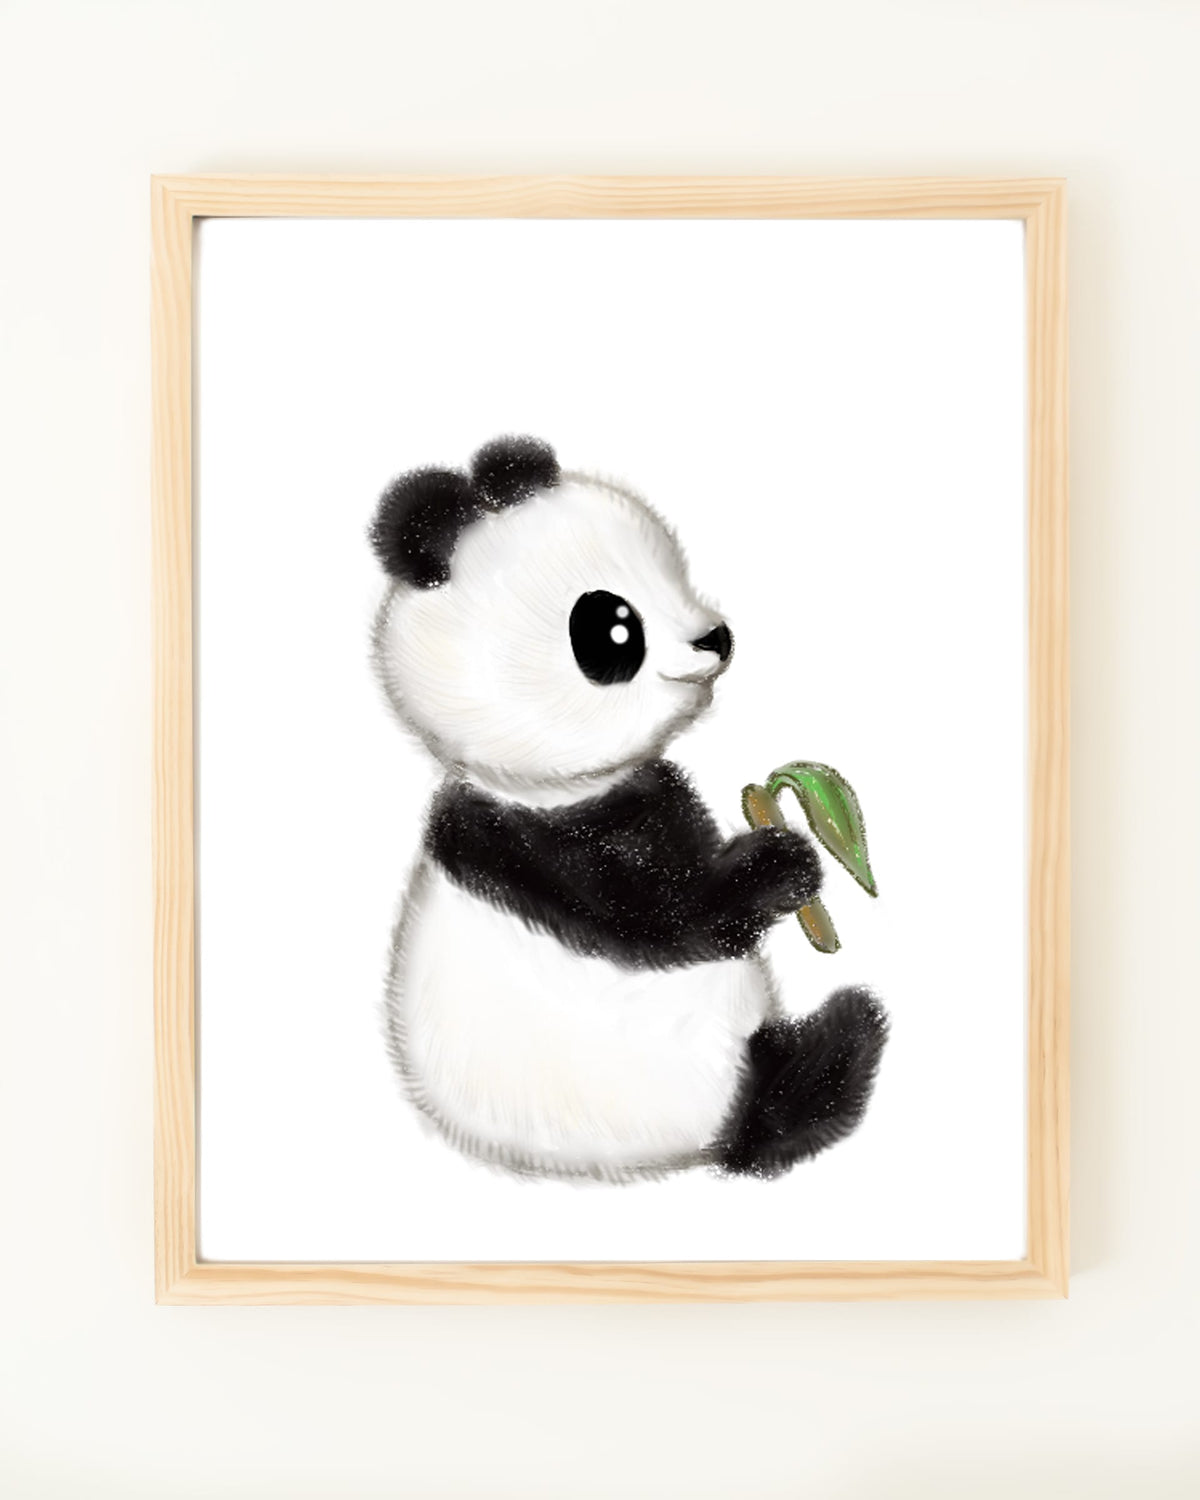 Framed hand drawn safari nursery decor wall art poster cute panda baby animal with bamboo